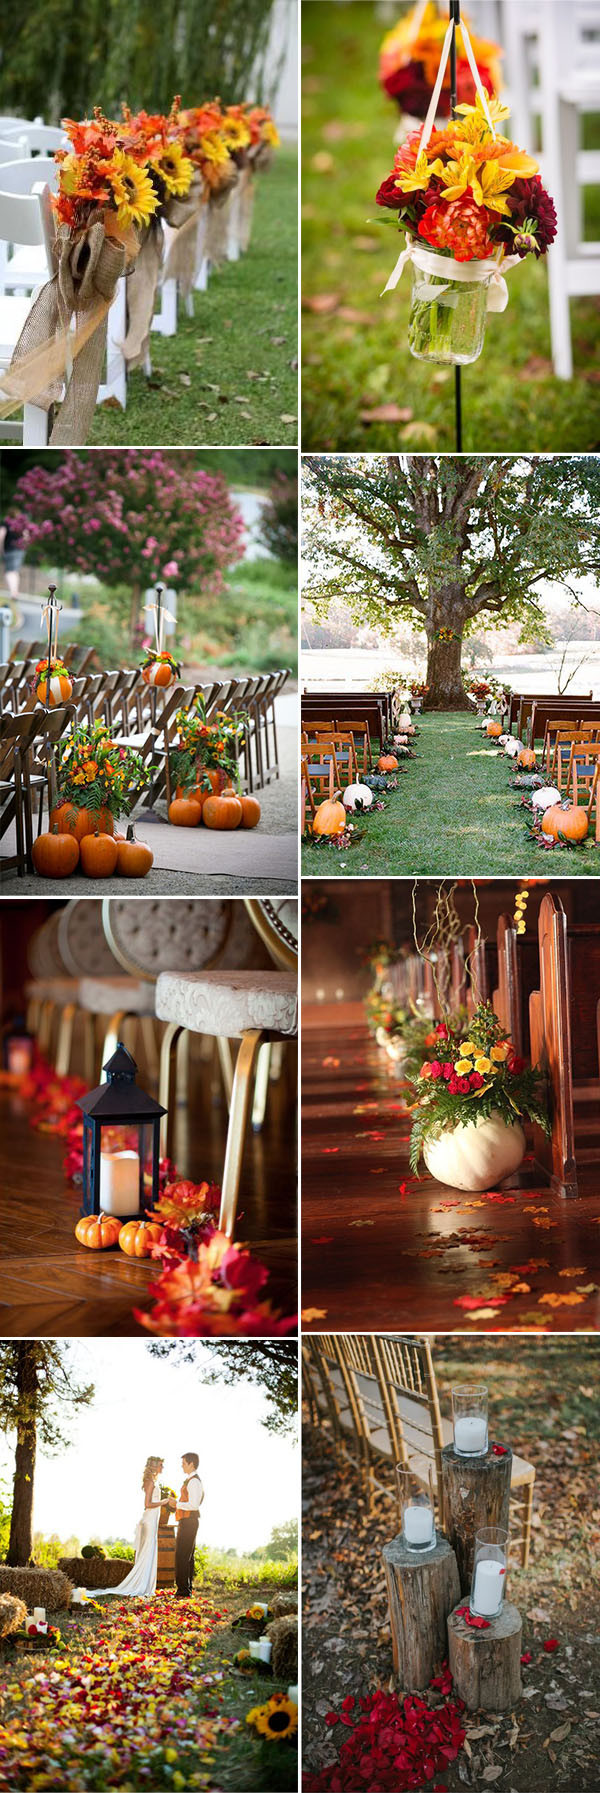 Fall Wedding Decorating Ideas
 50 Genius Fall Wedding Ideas You’ll Love To Try